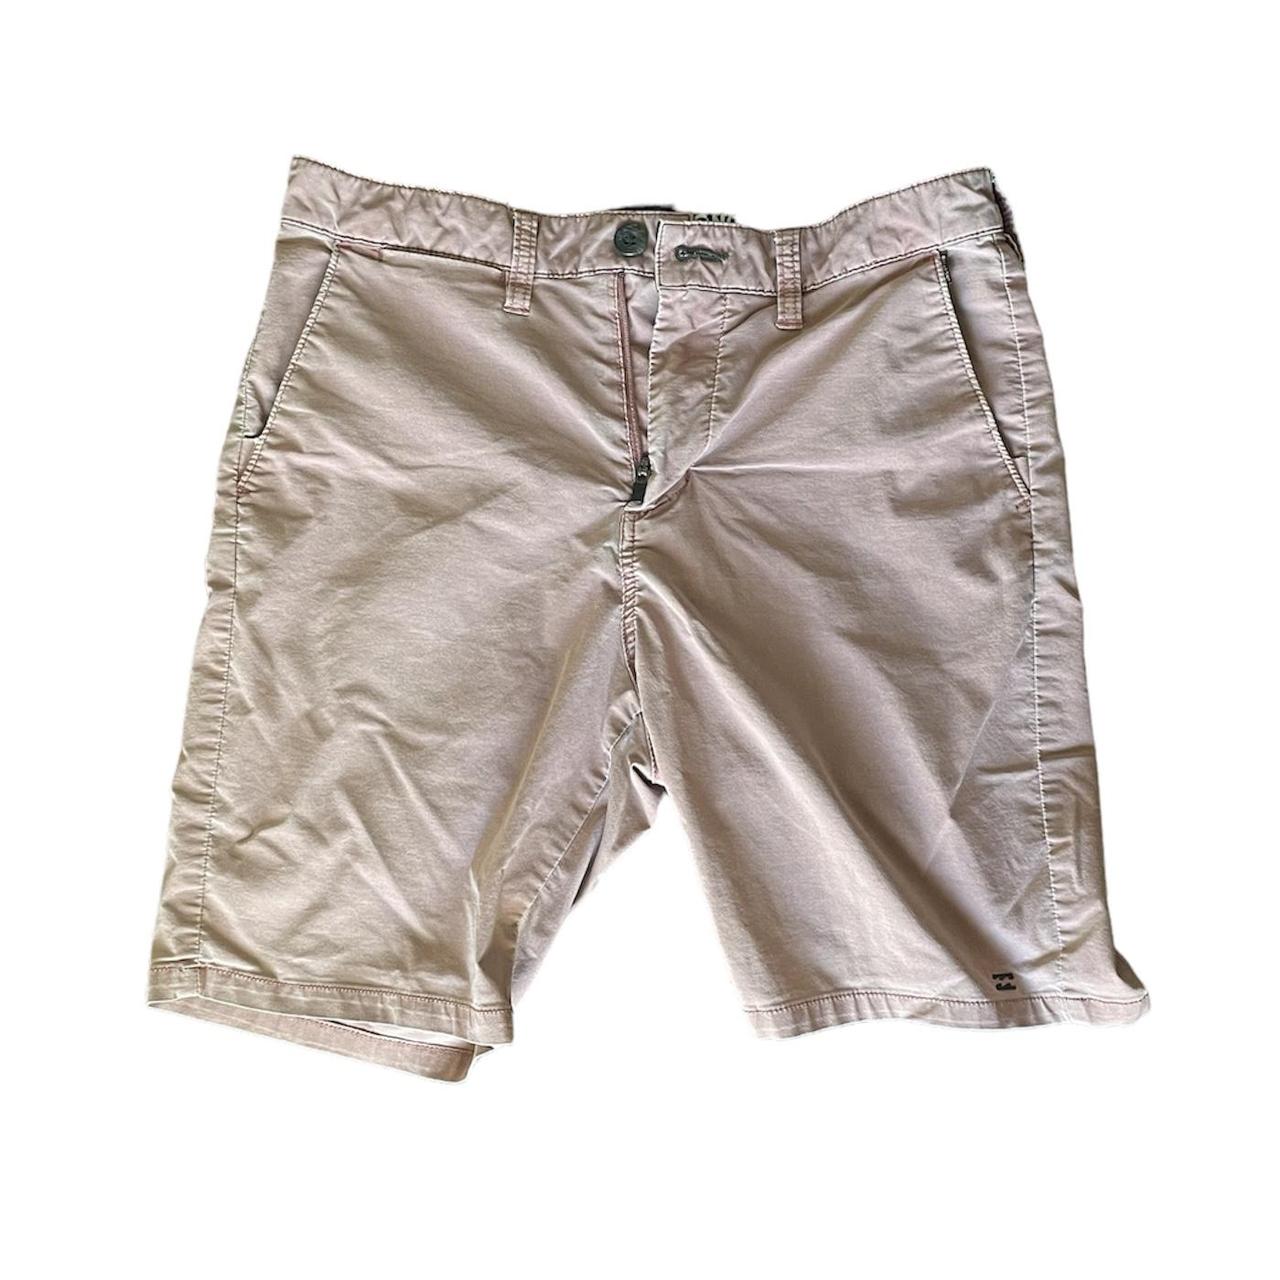 Billabong Men's Pink and Tan Shorts | Depop